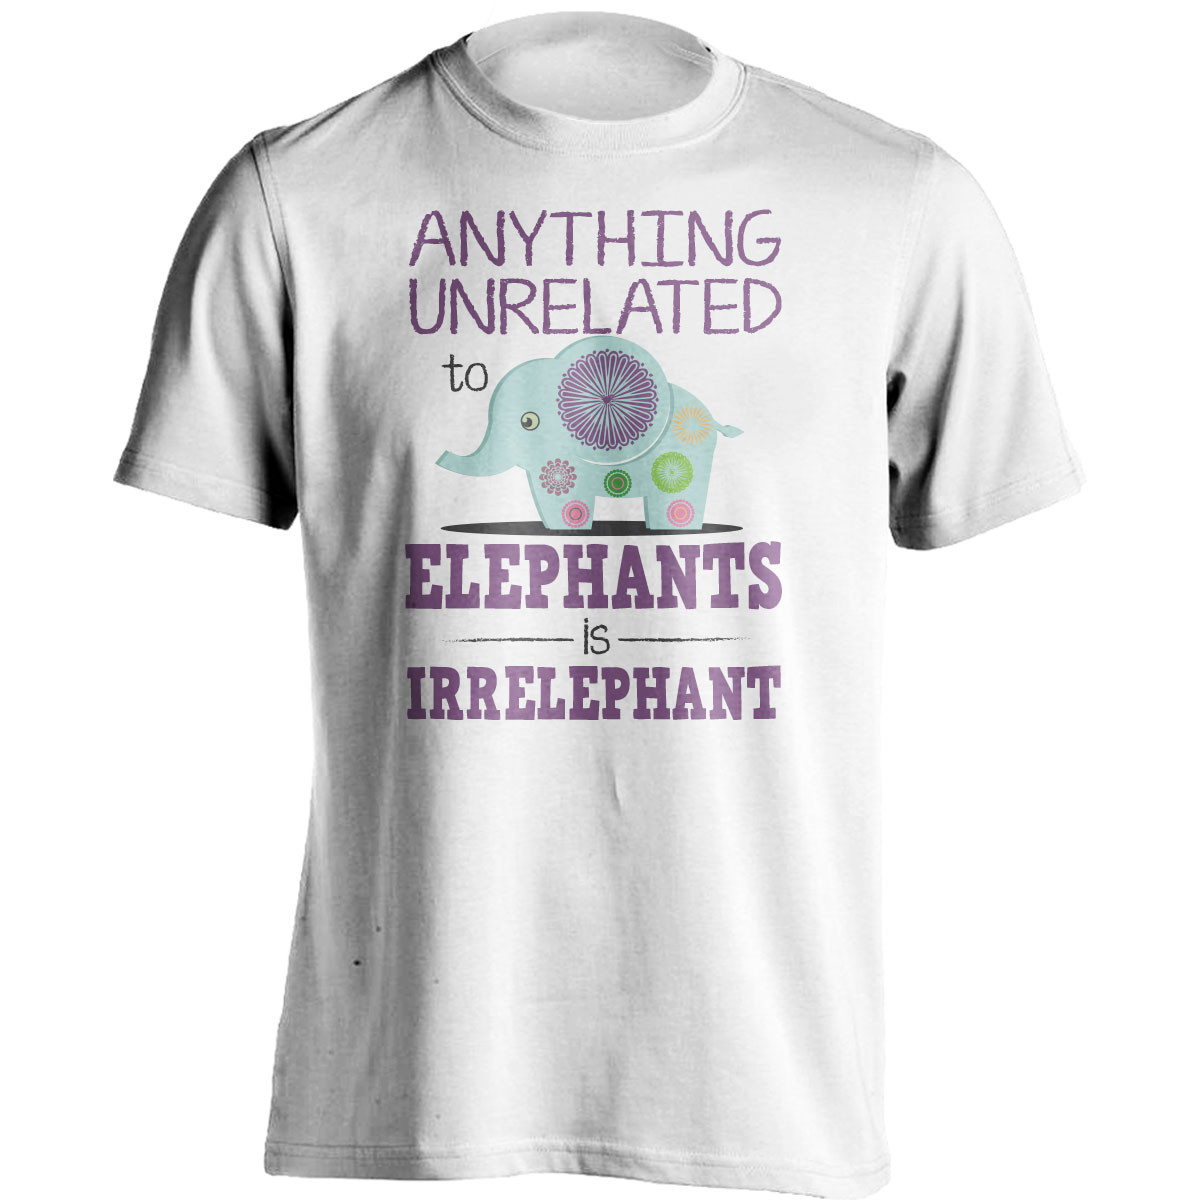 "Anything Unrelated To Elephants Is Irrelephant" T-Shirt